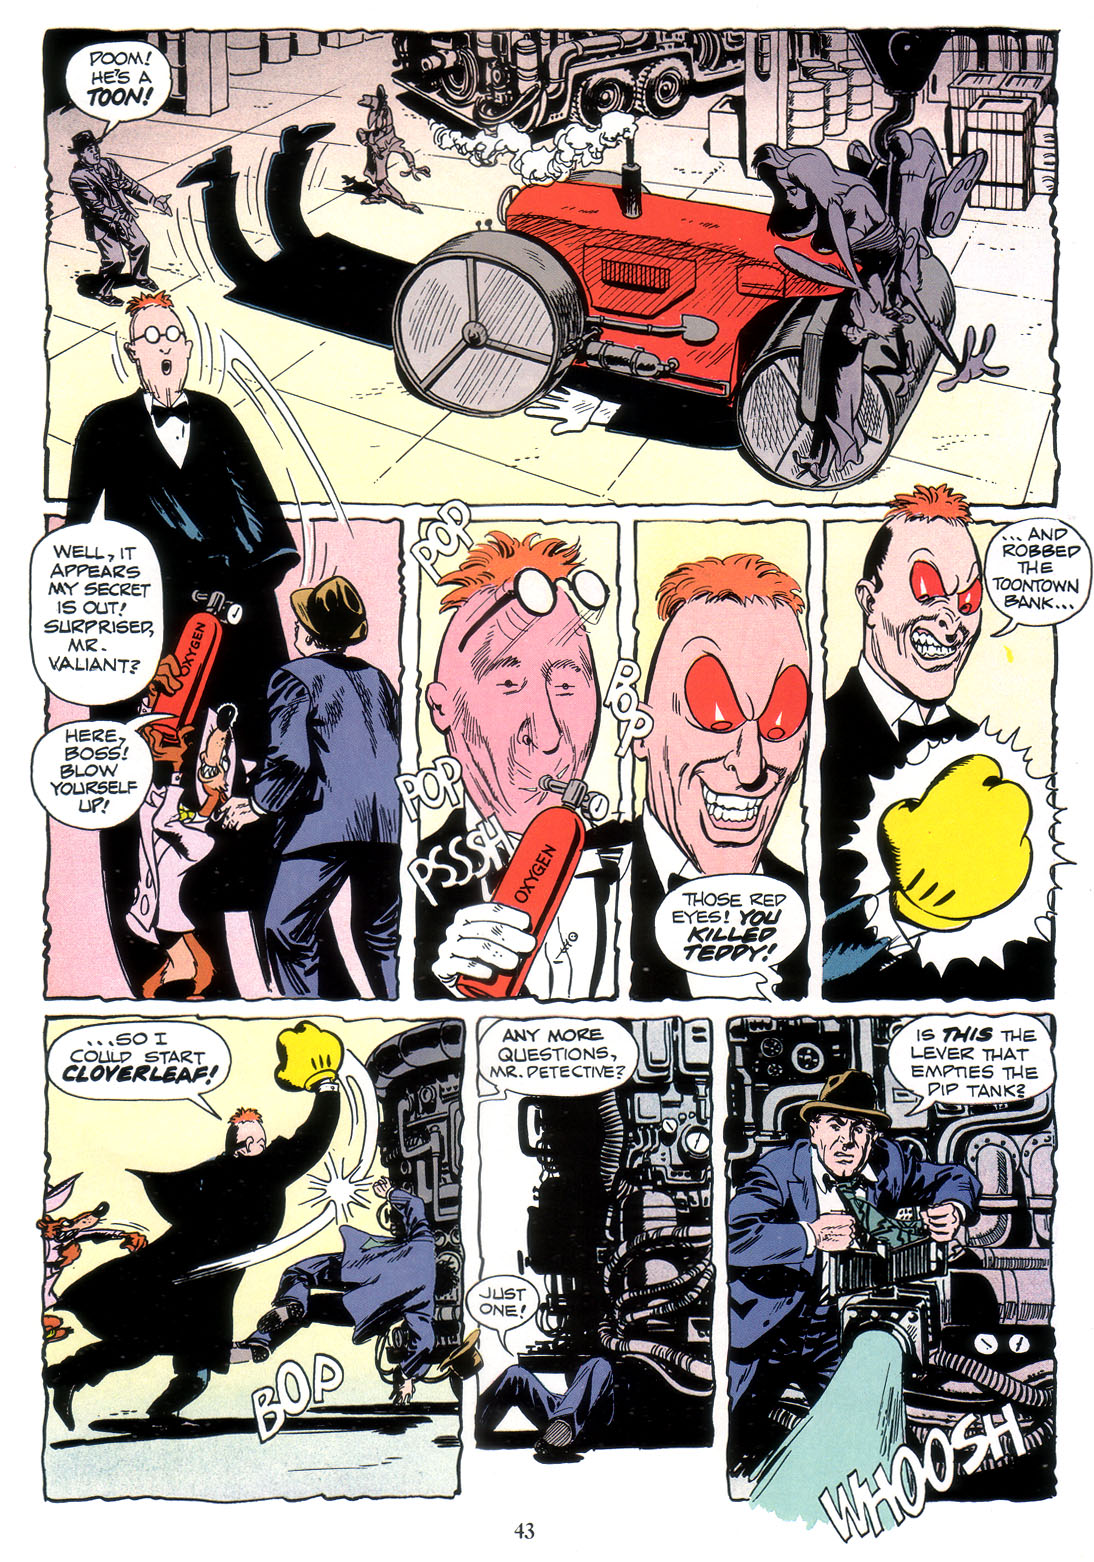 Marvel Graphic Novel issue 41 - Who Framed Roger Rabbit - Page 45